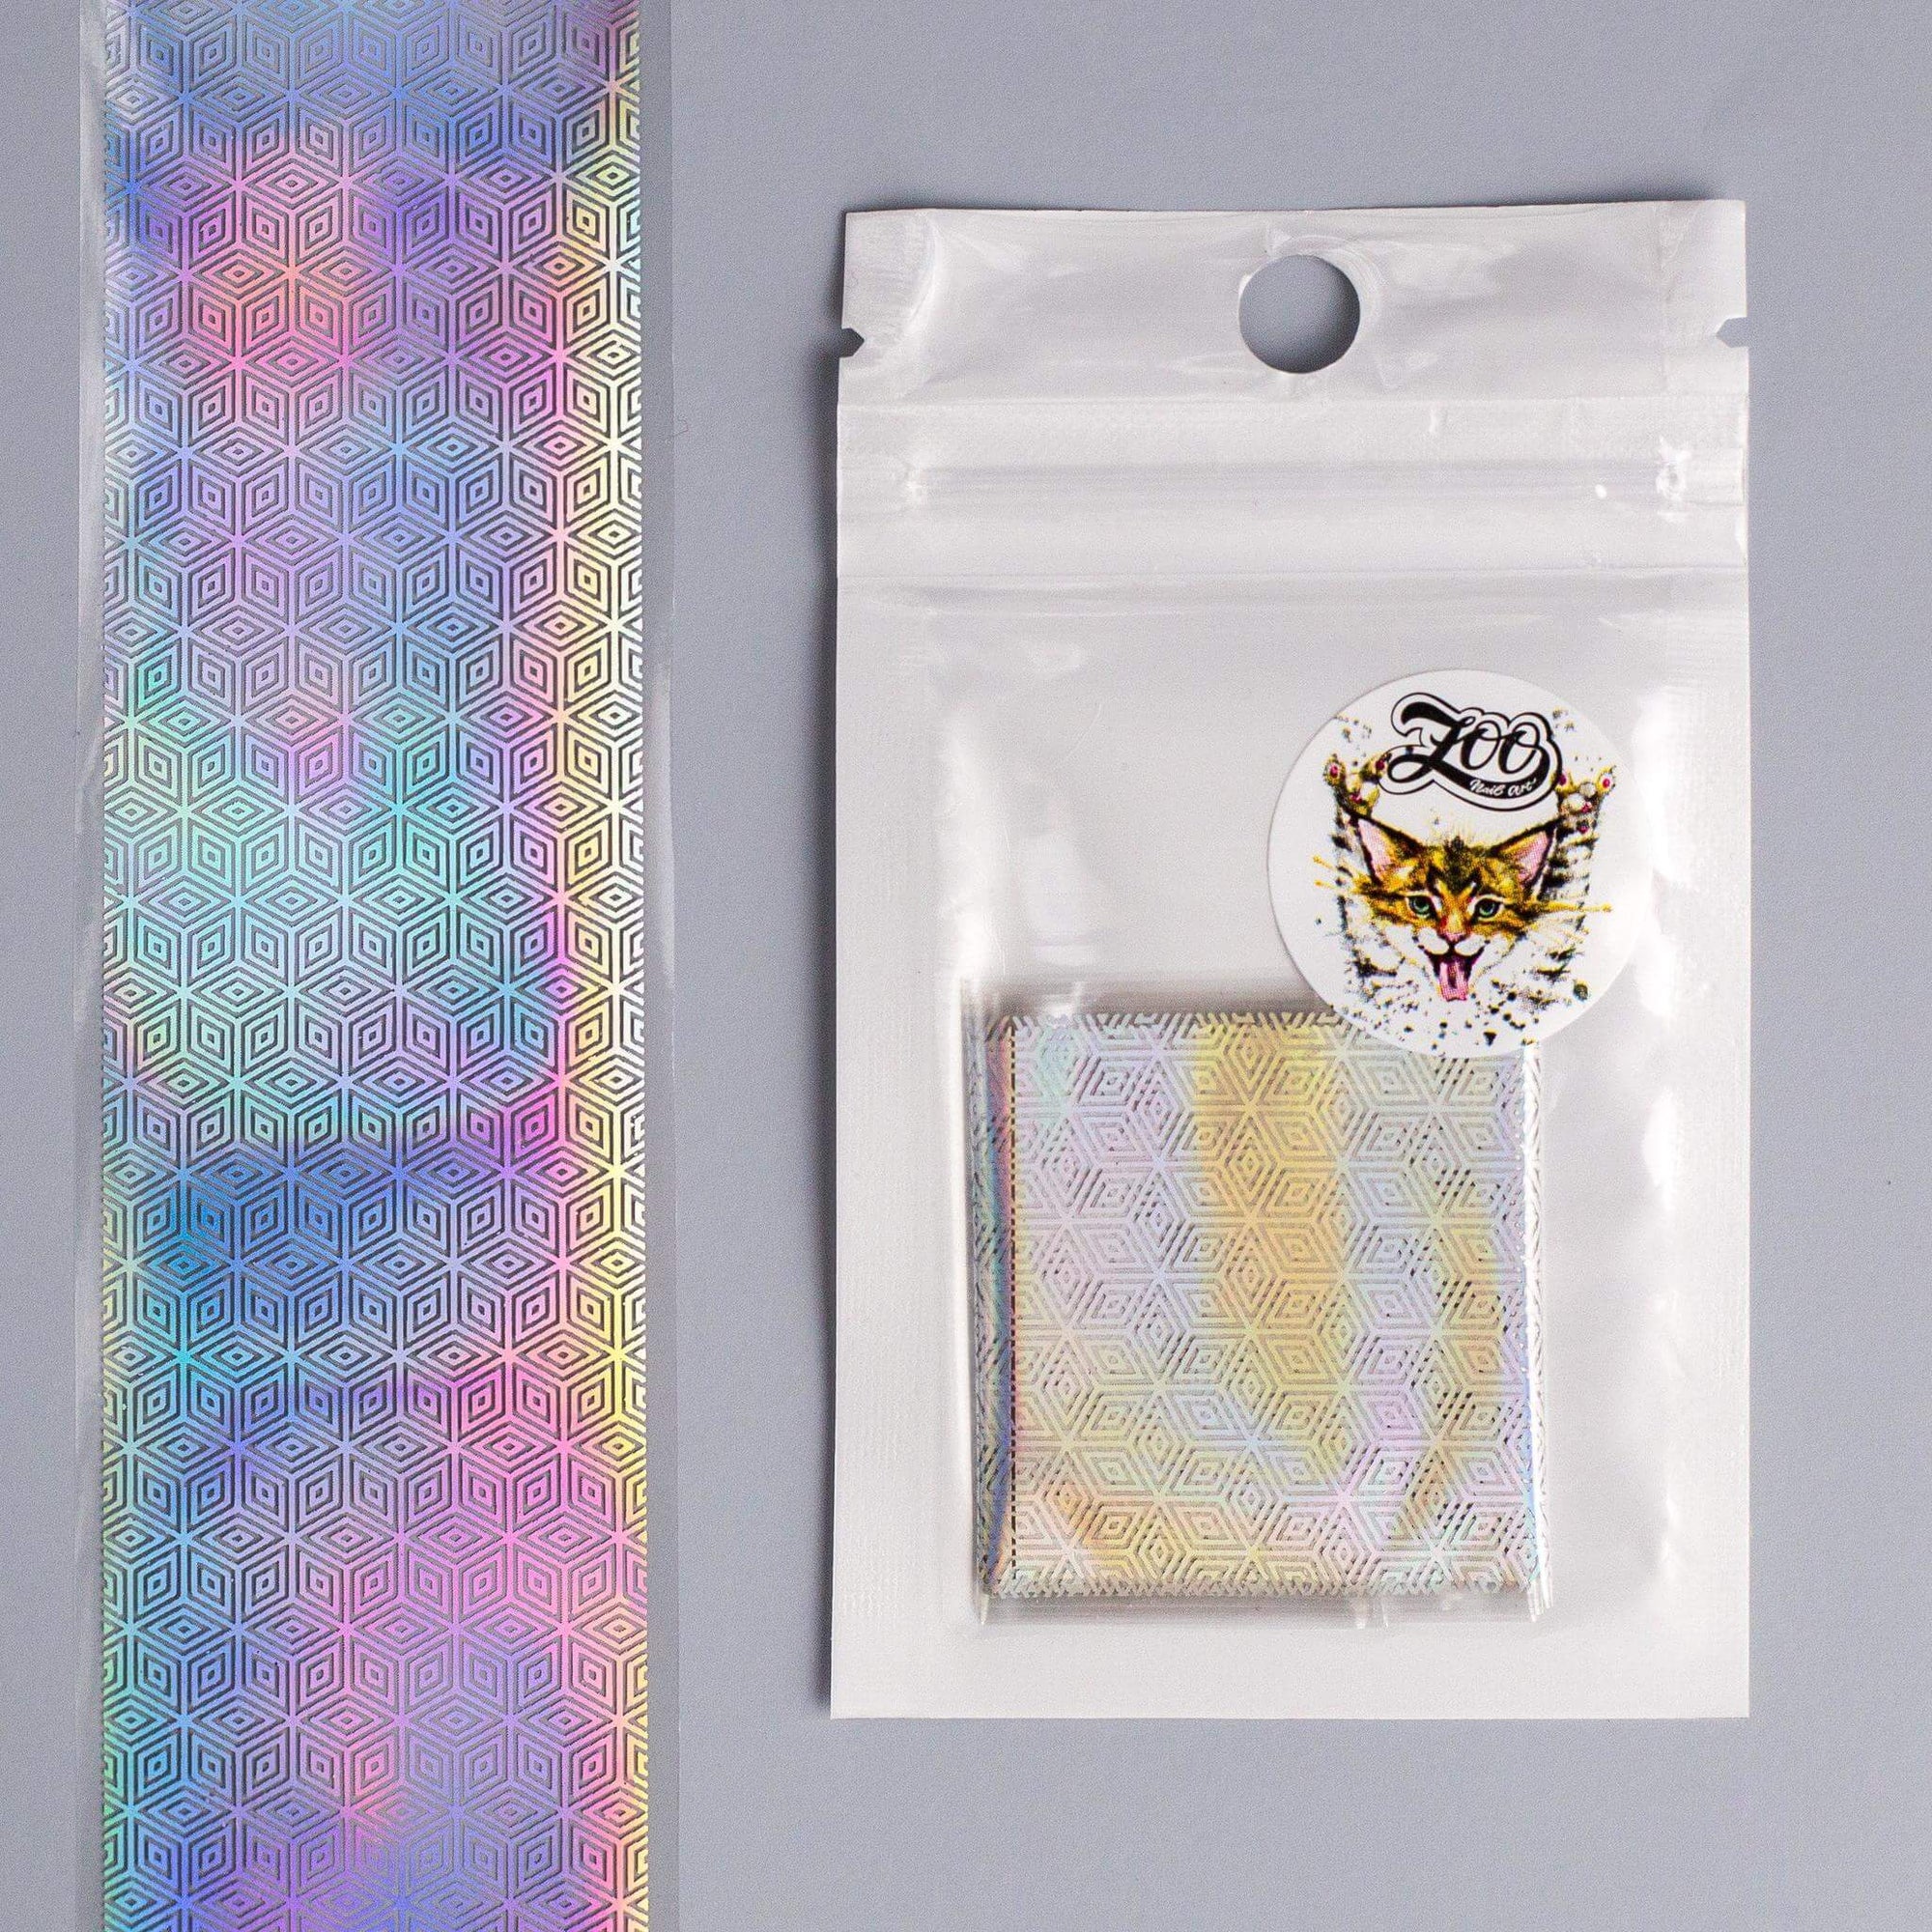 Zoo Nail Art Transfer Foil - Chrome Holography Cubes